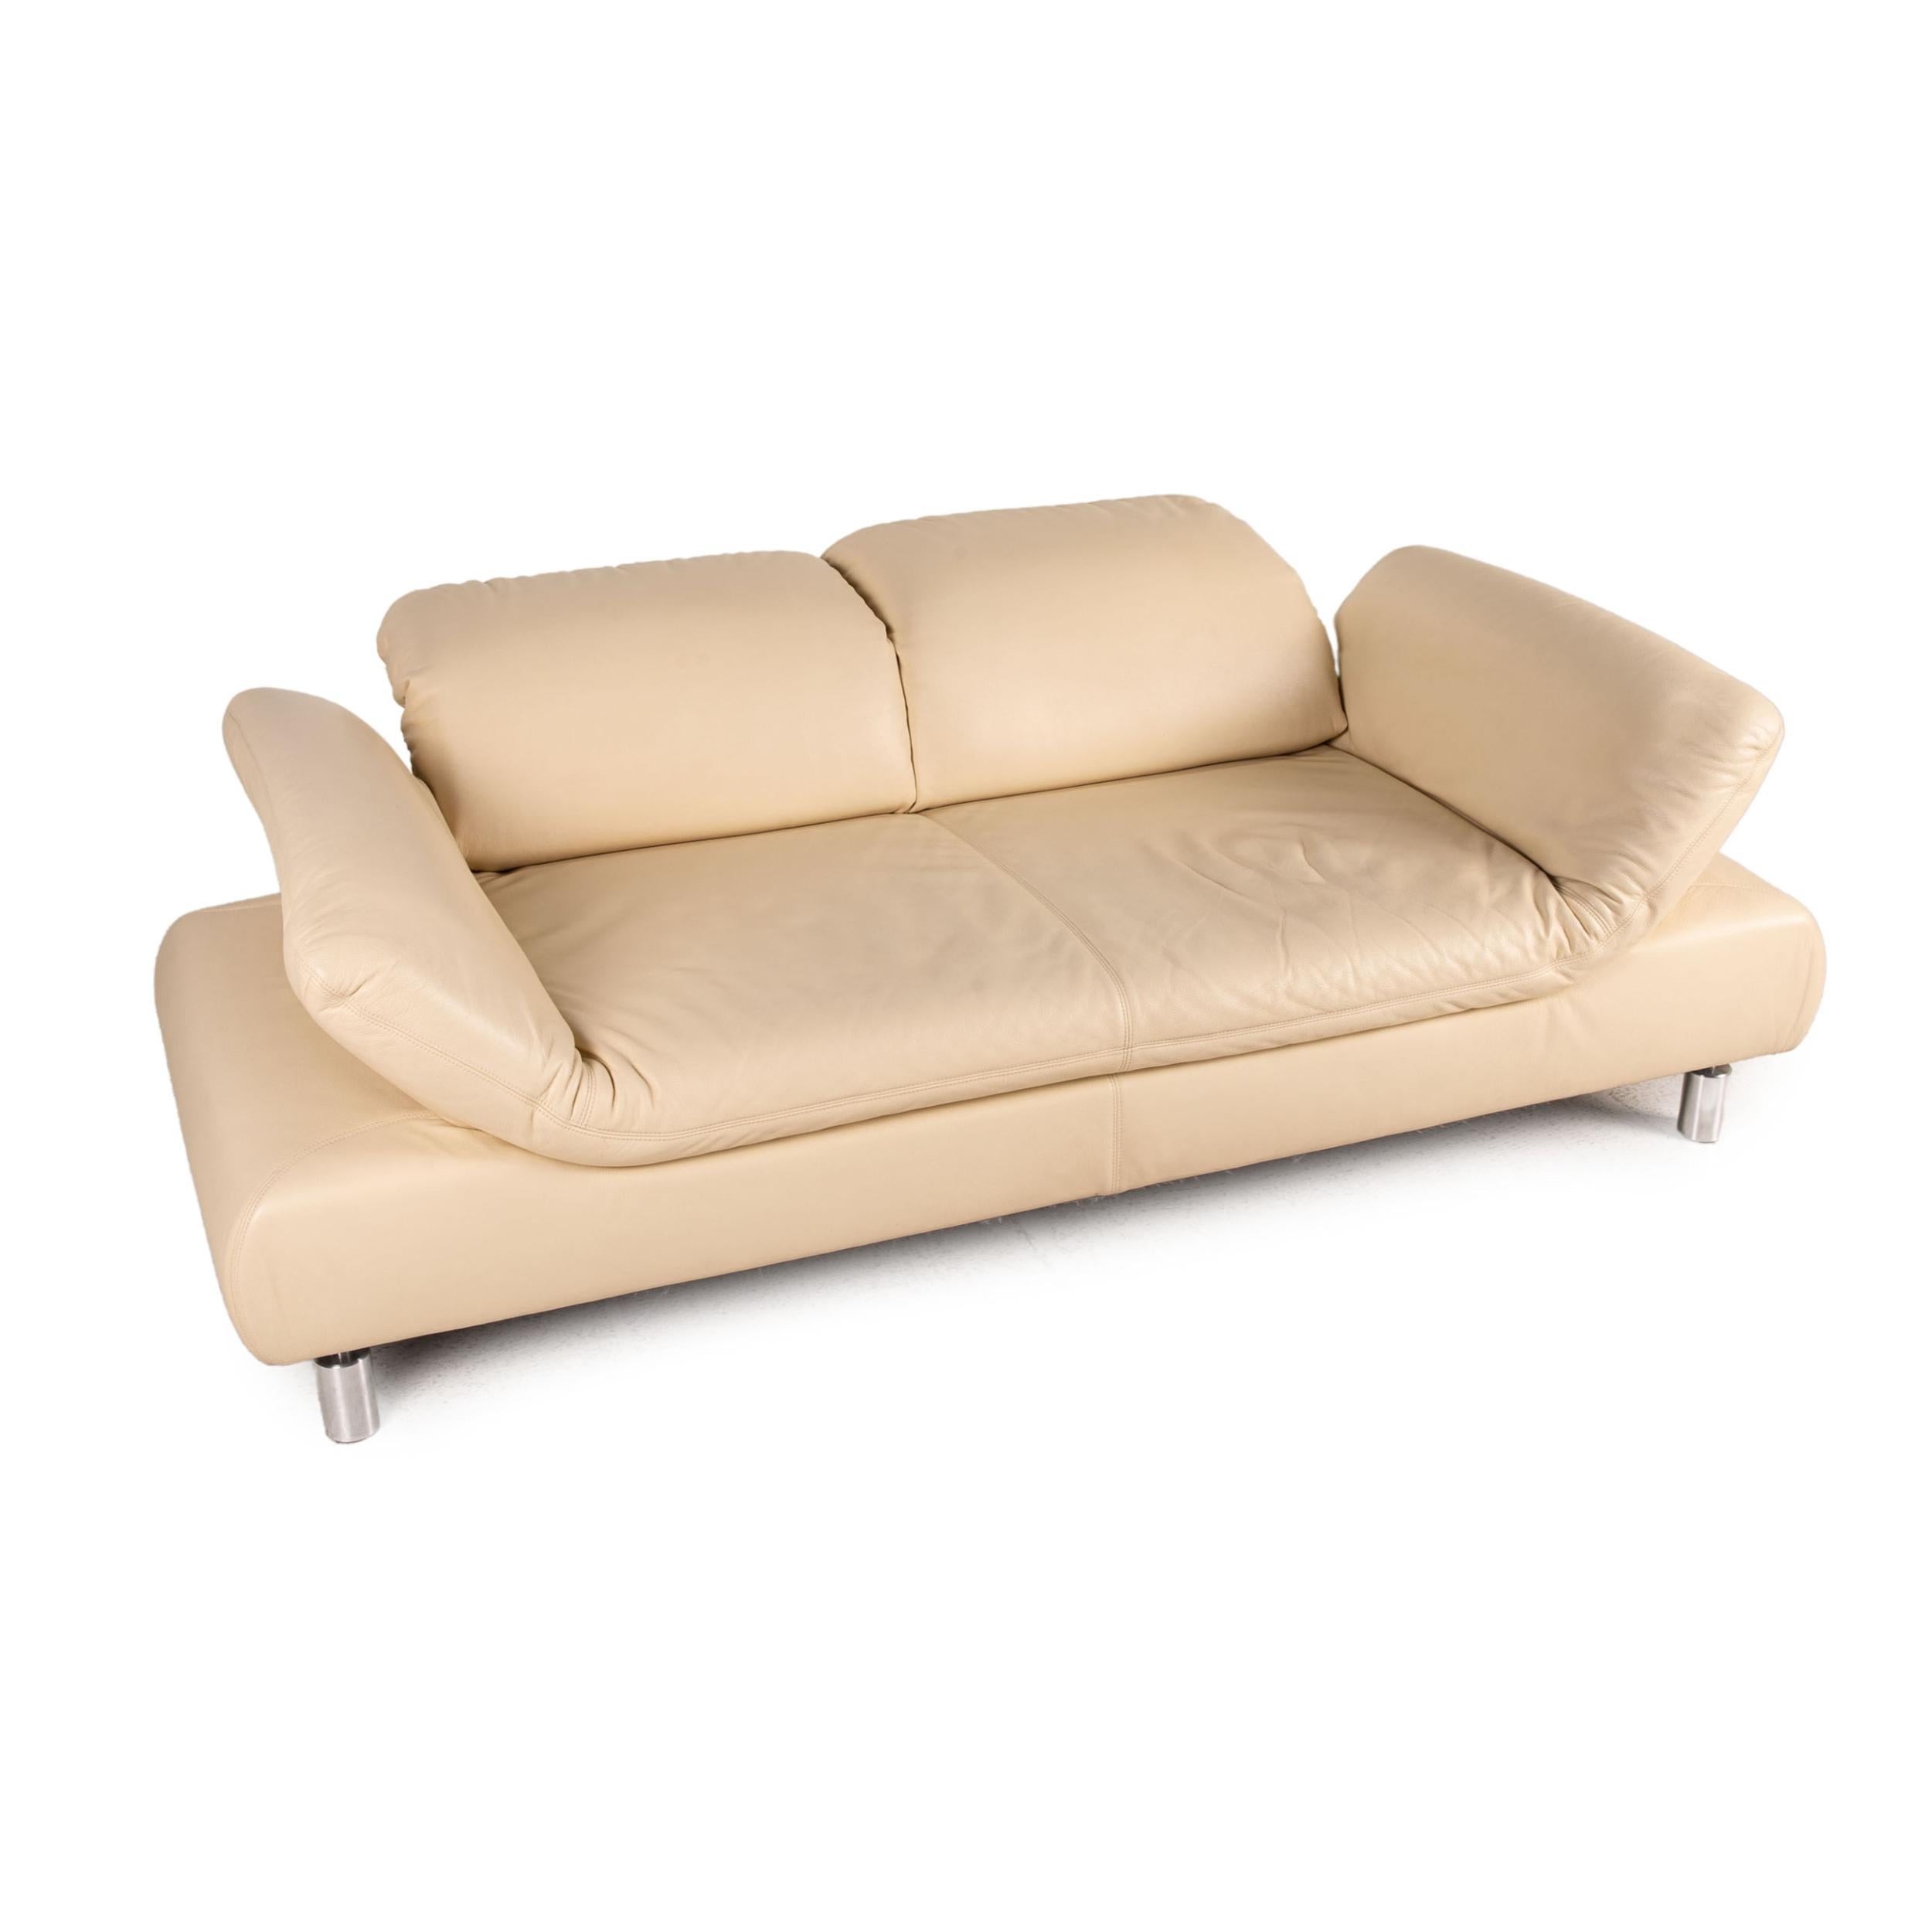 Modern Koinor Rivoli leather sofa set cream 1x two-seater 1x stool function For Sale